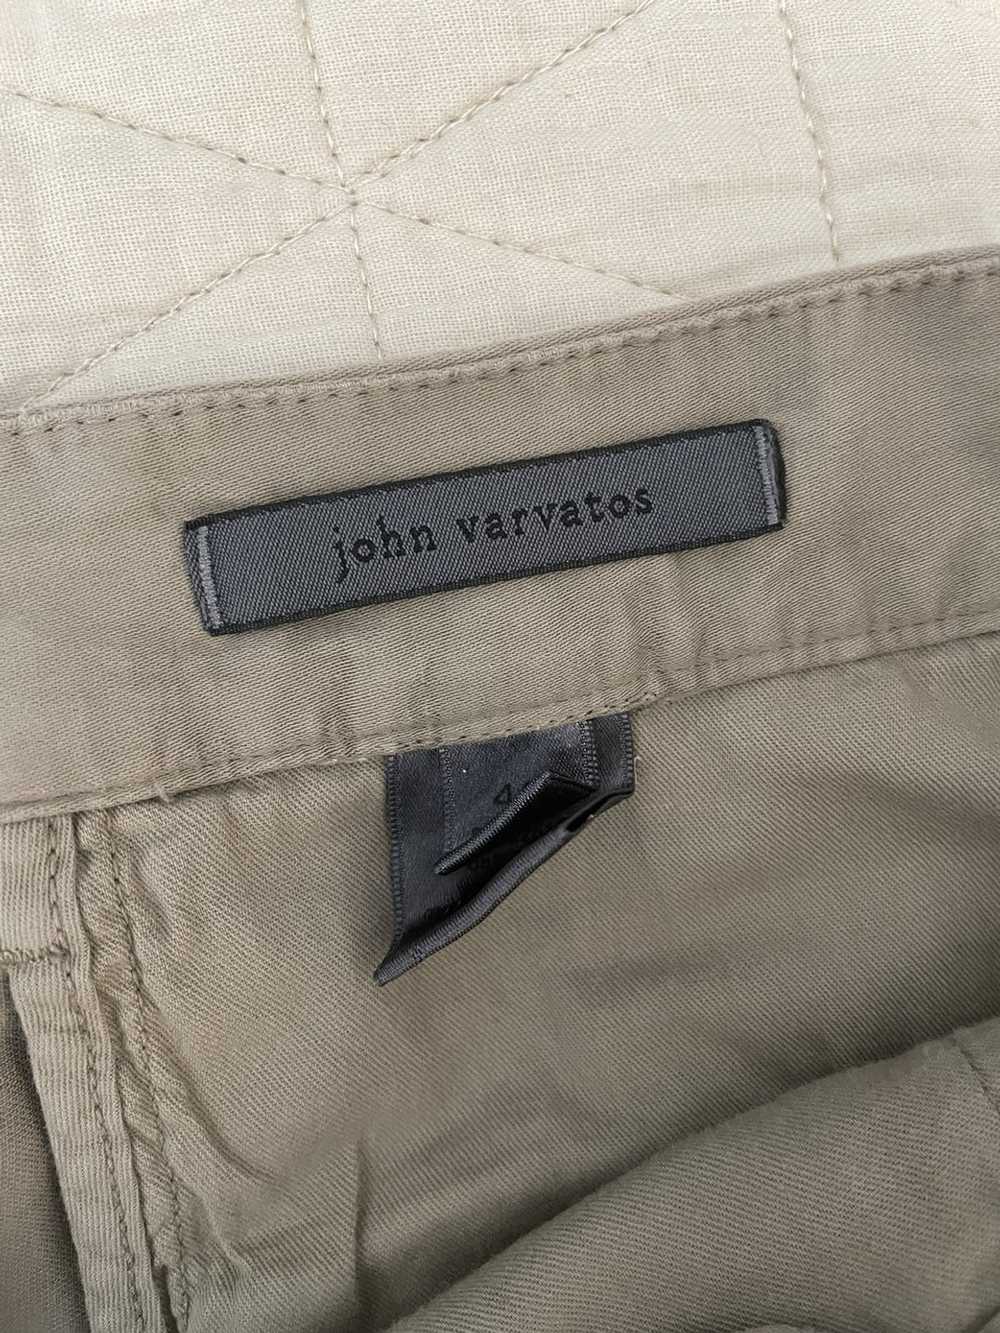 John Varvatos Flat Front Trouser - image 5